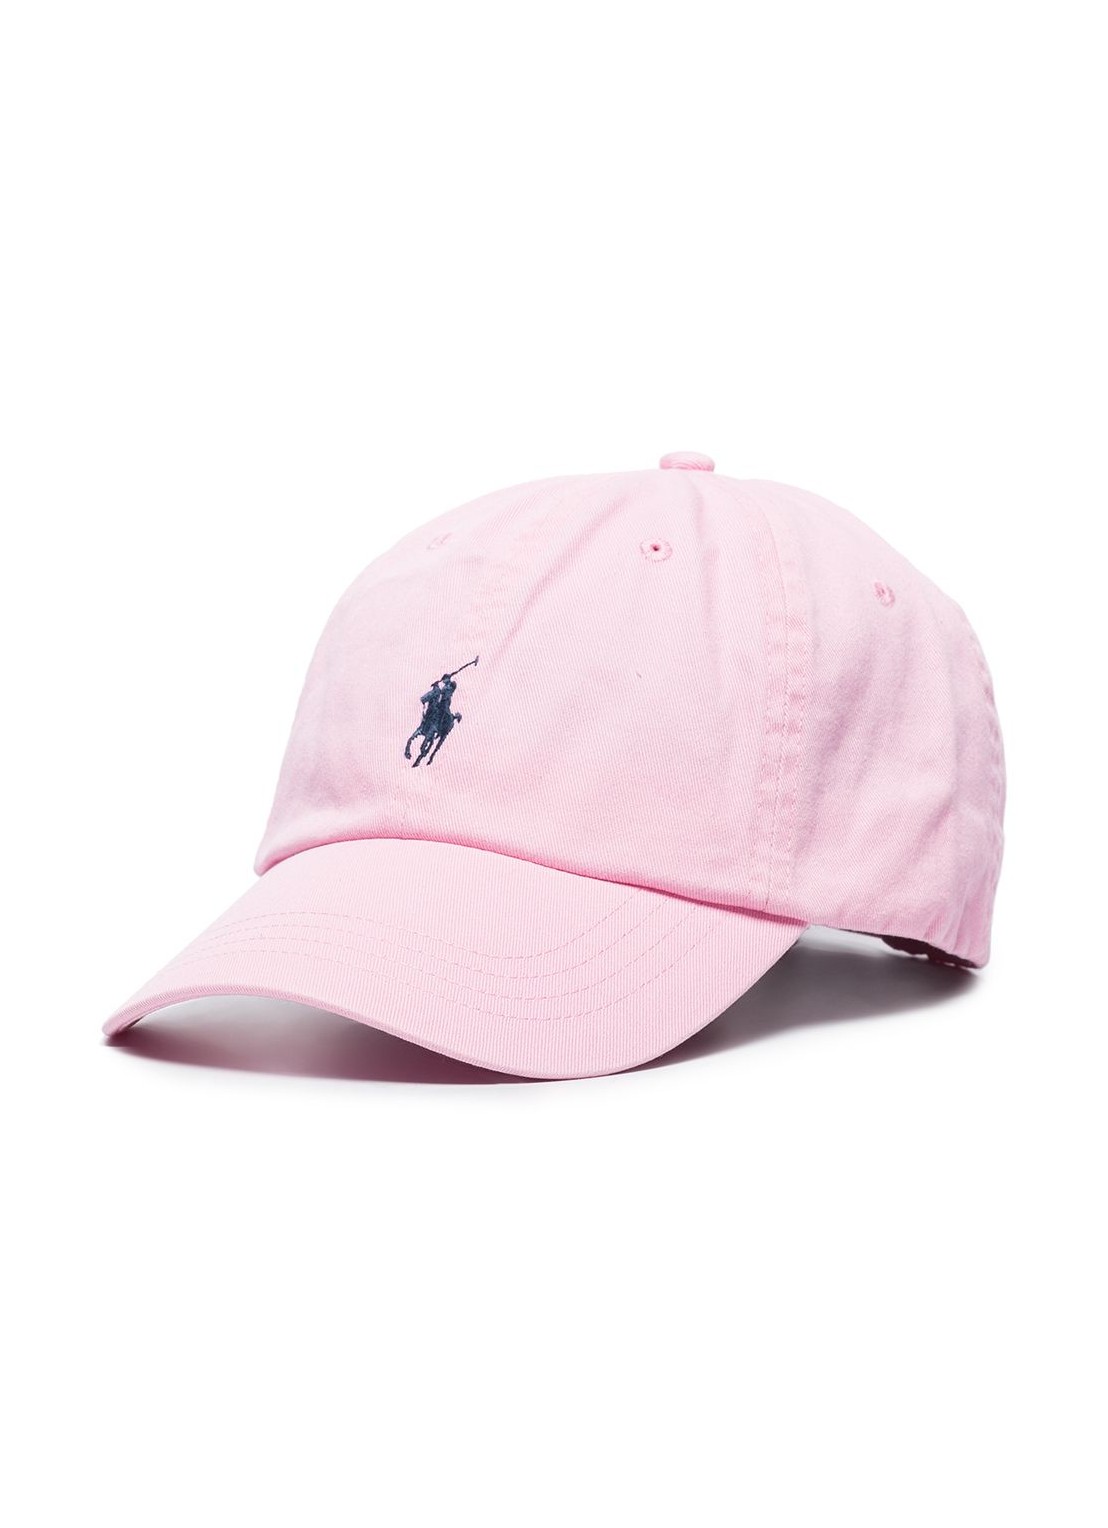 Gorras polo ralph lauren cap man sport cap-hat 710548524008 carmel pink jewel blue talla rosa
 